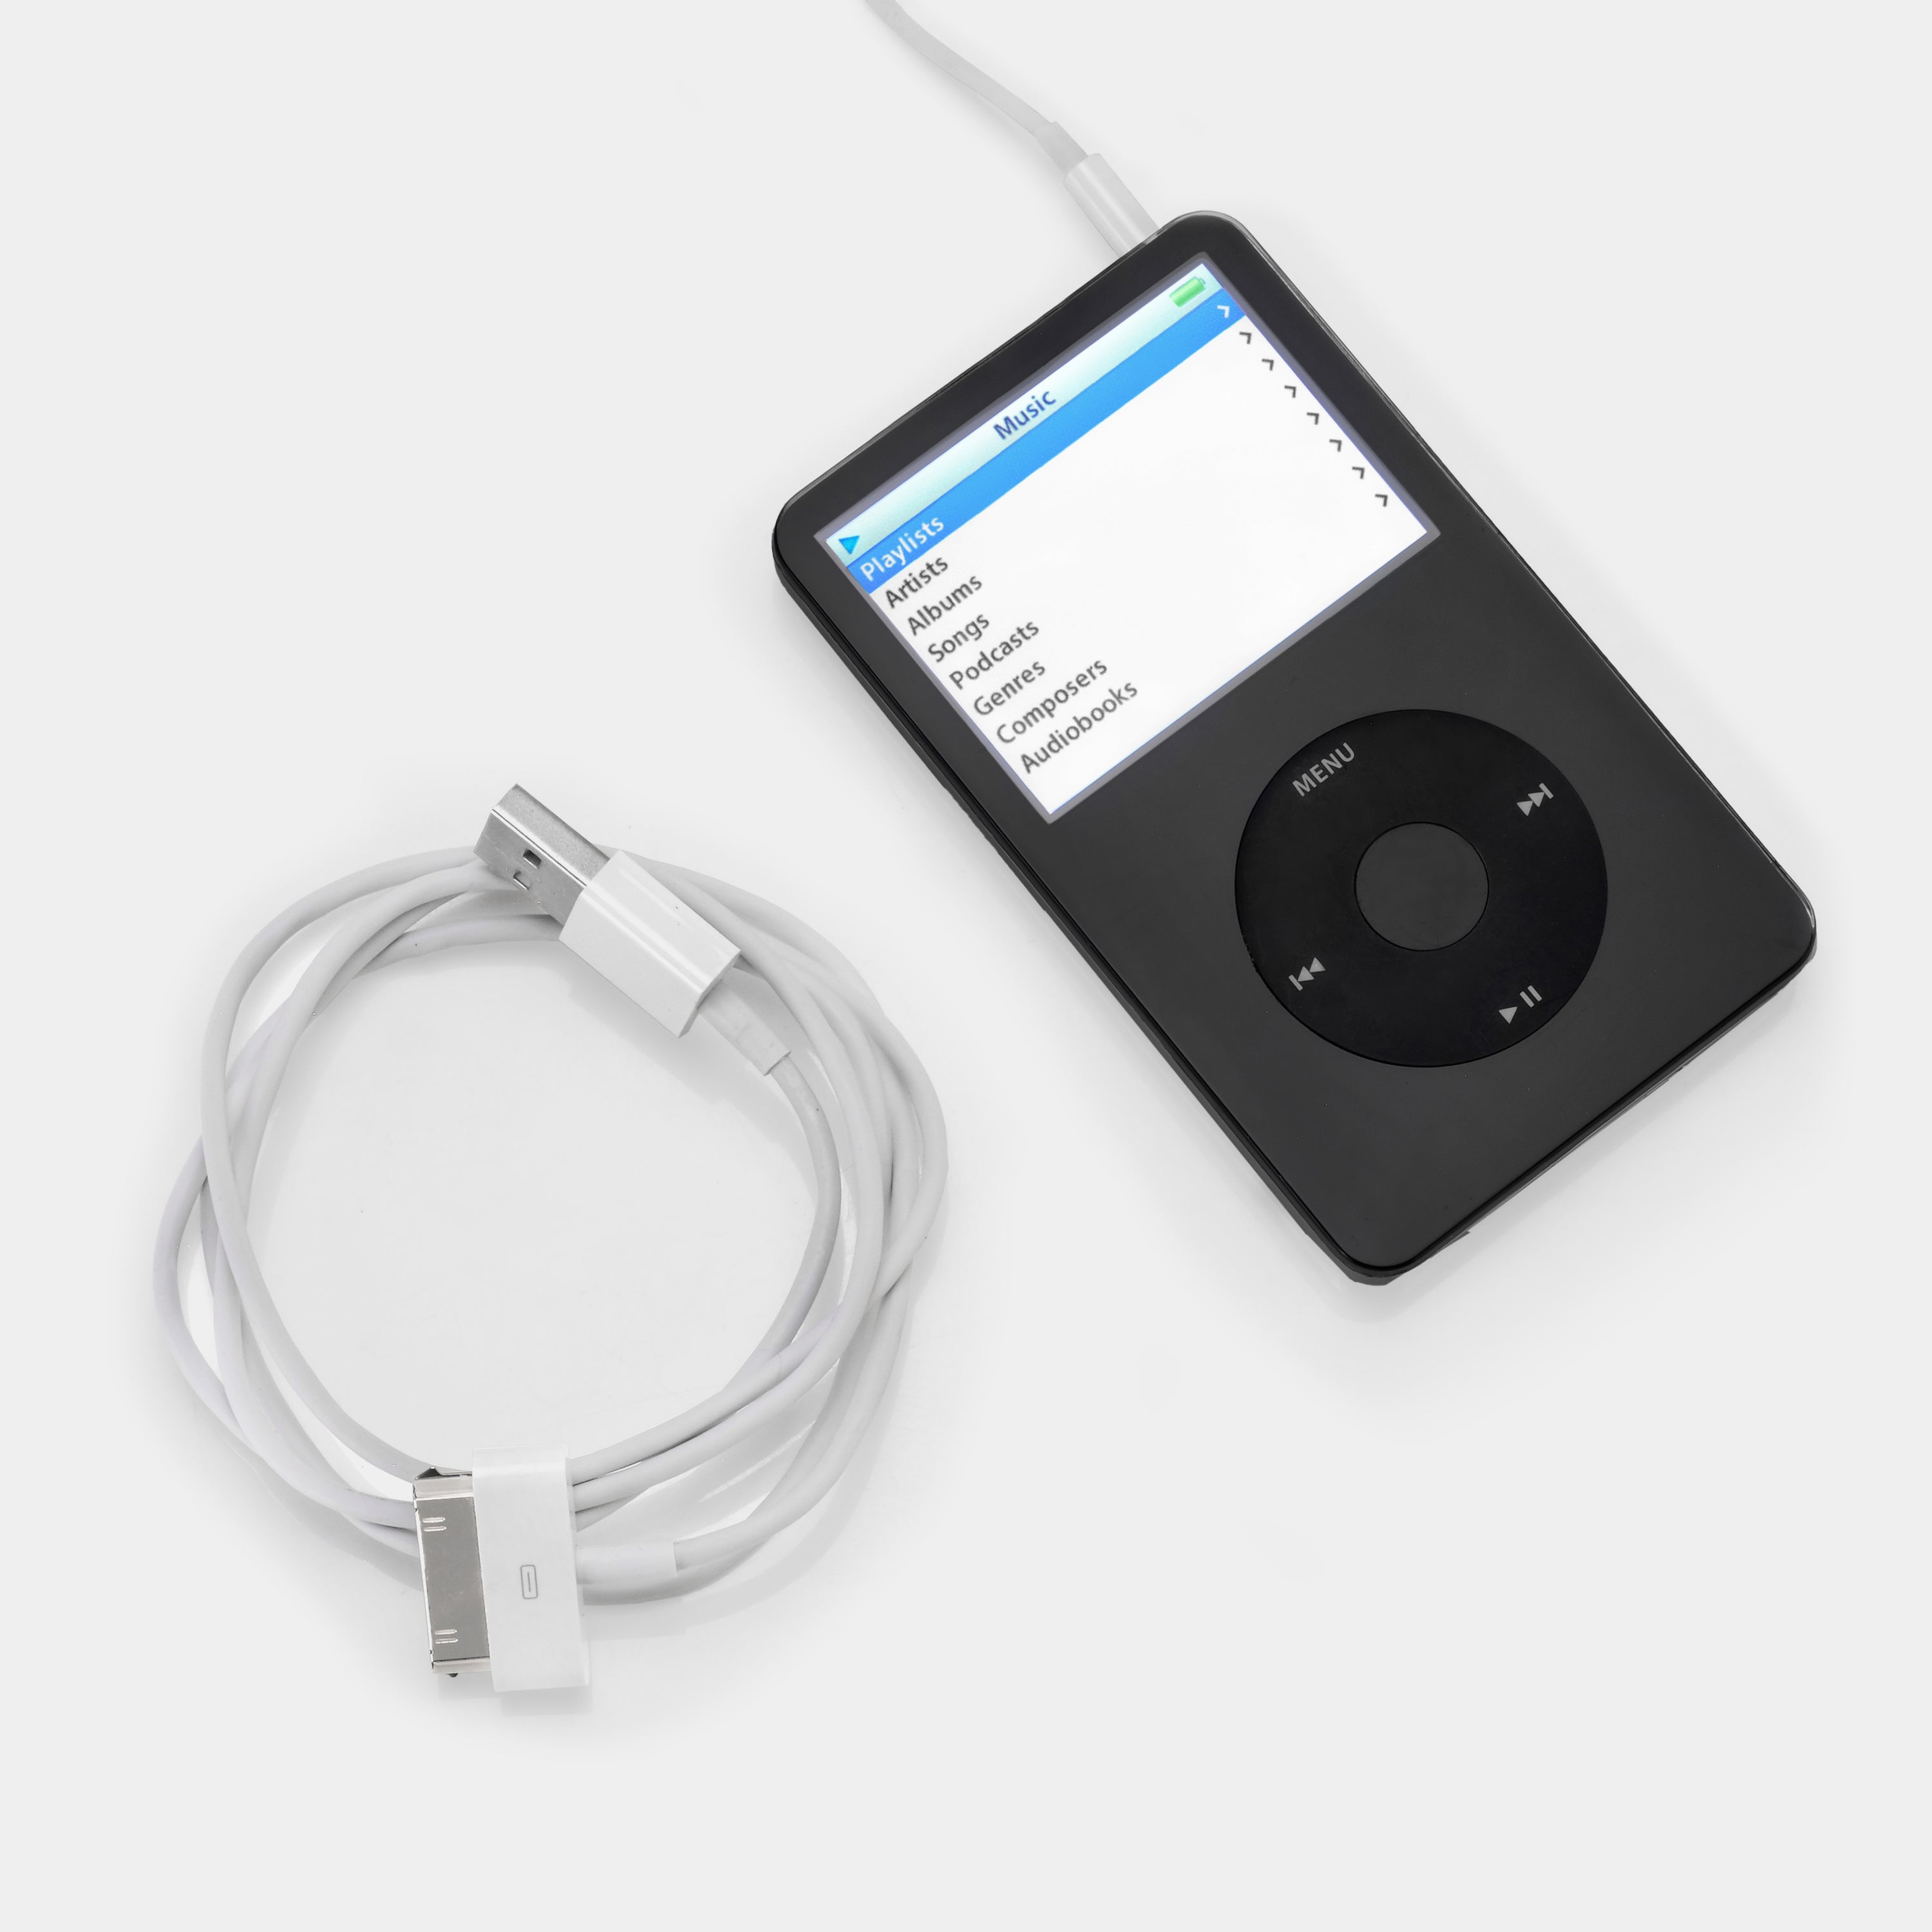 End radiator Fordi Apple iPod (5th Generation) Black MP3 Player